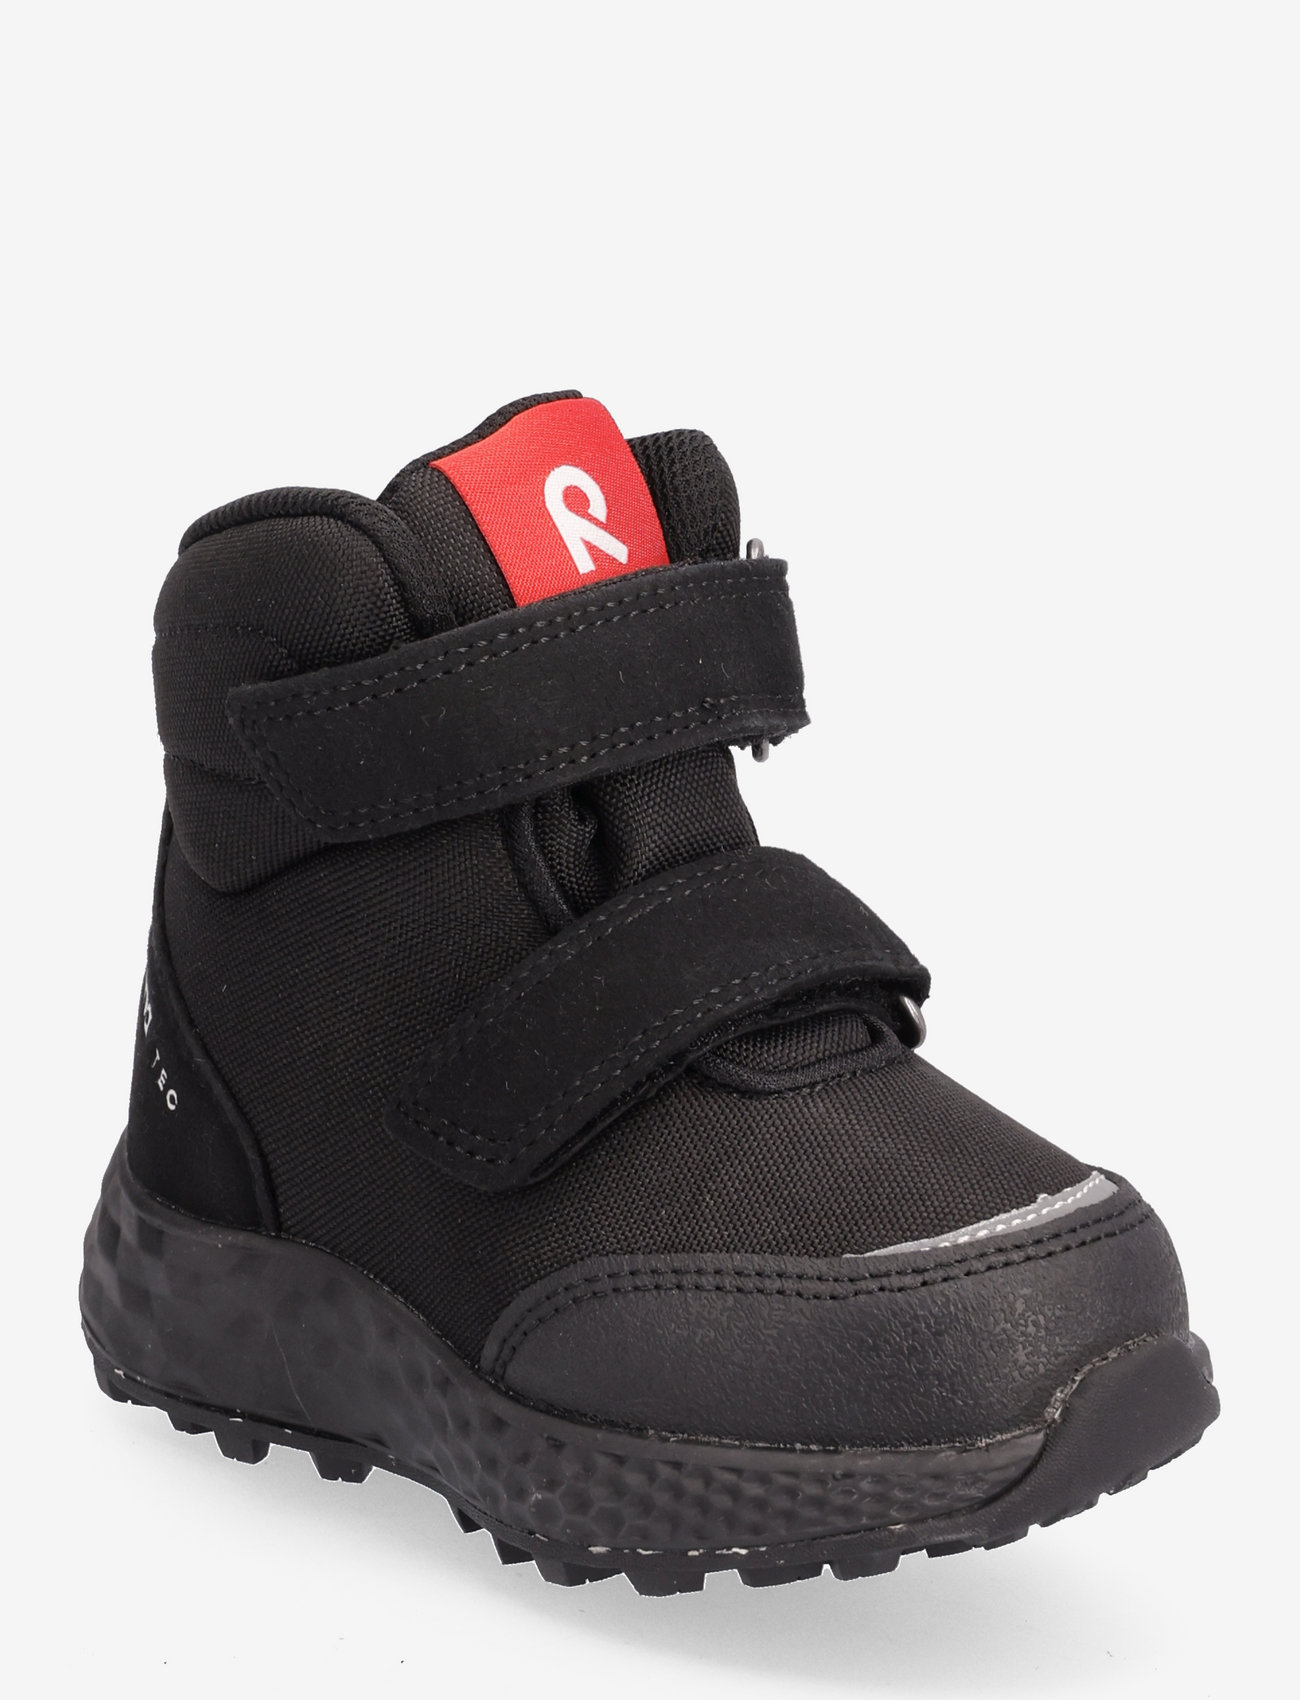 Reima - Reimatec shoes, Ehdi - kinder - black - 0